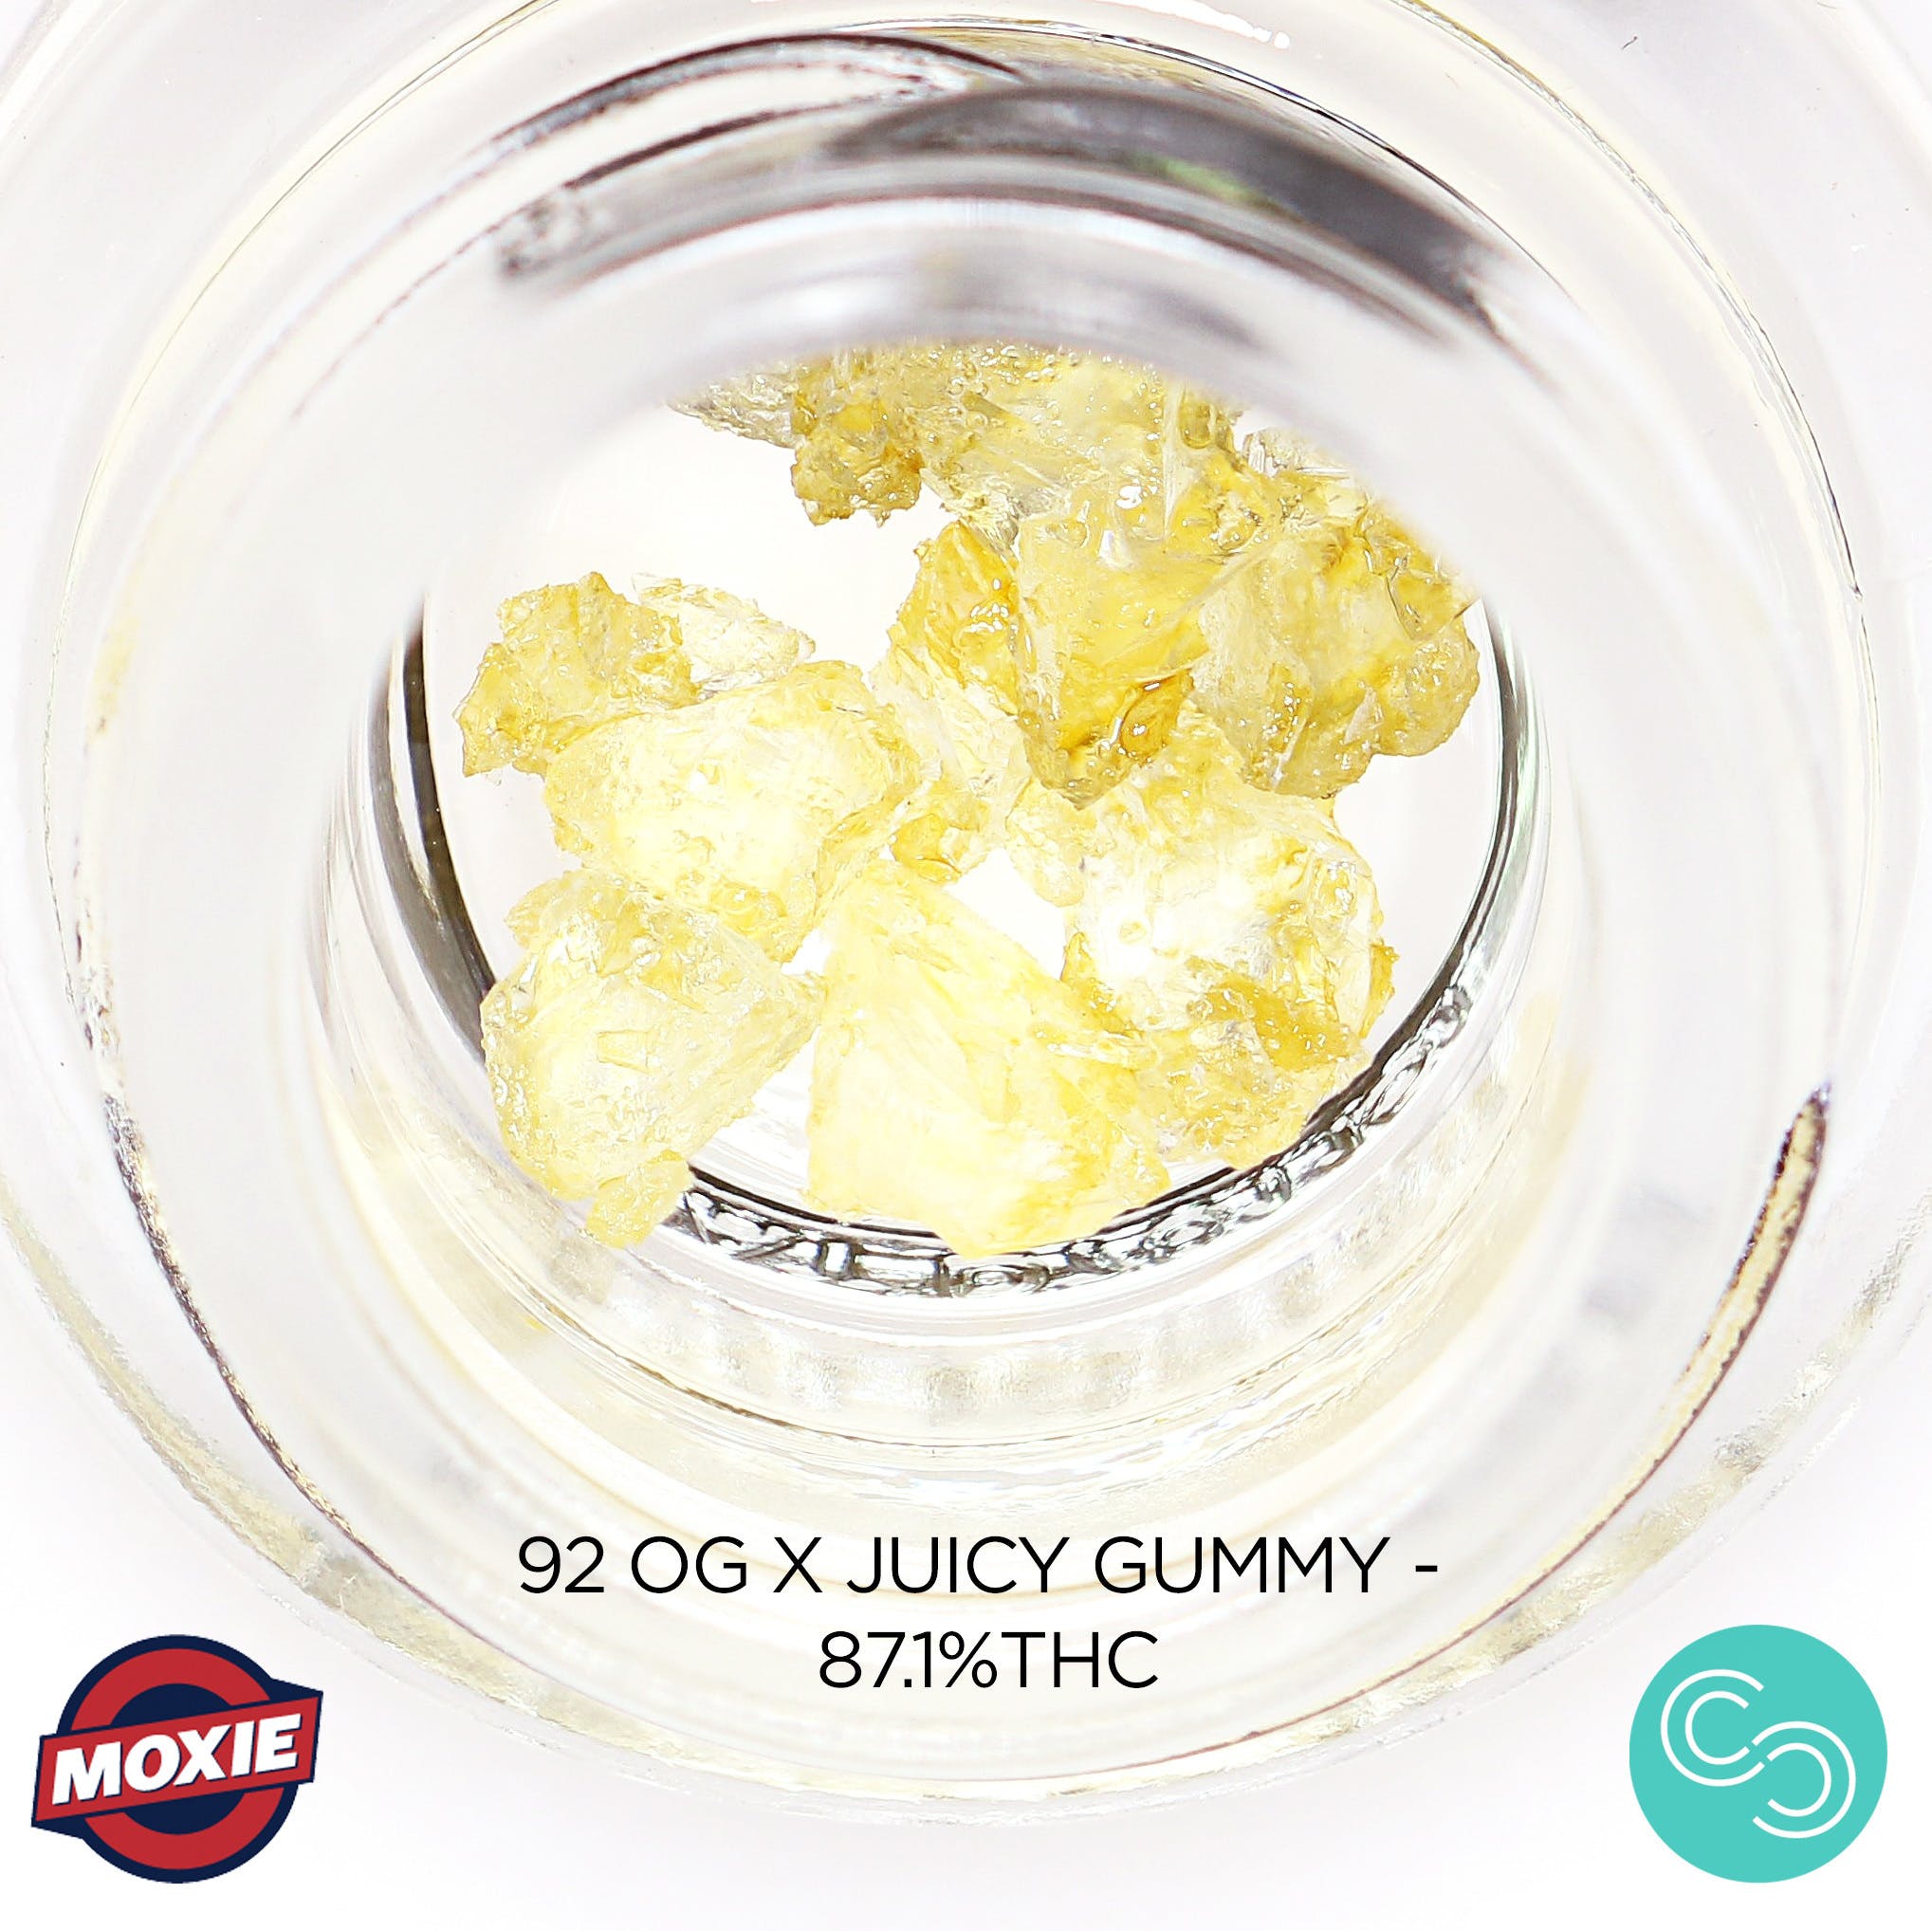 marijuana-dispensaries-114a-otto-circle-sacramento-moxie-92-og-x-juicy-gummy-87-1-25-thc